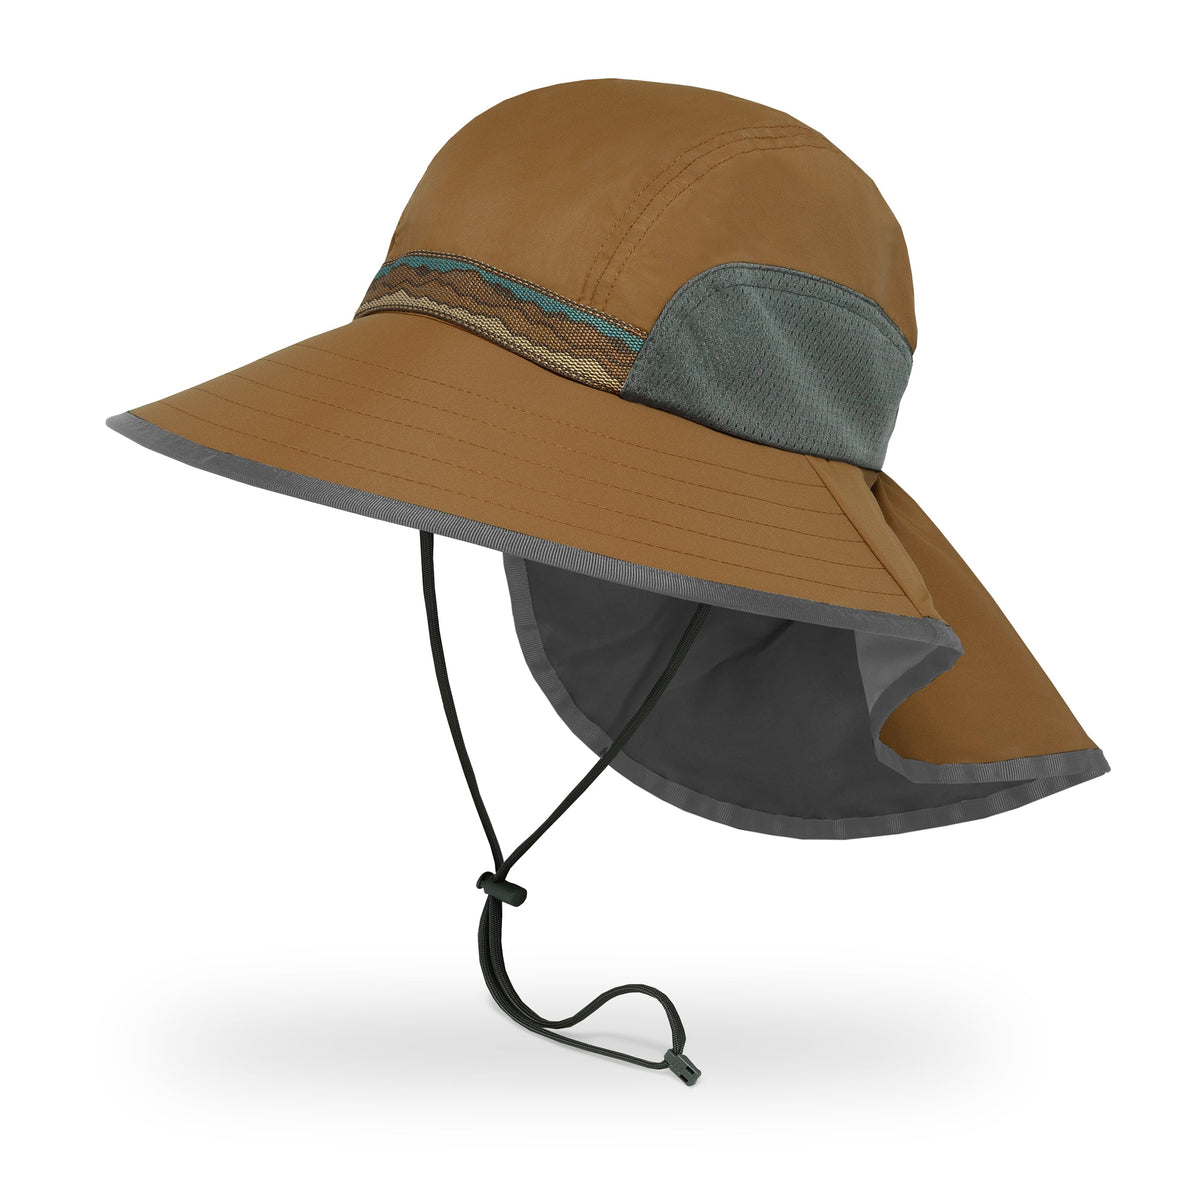 Black Bucket hat Classic Basic Design Breathable unisex style foldable L/XL